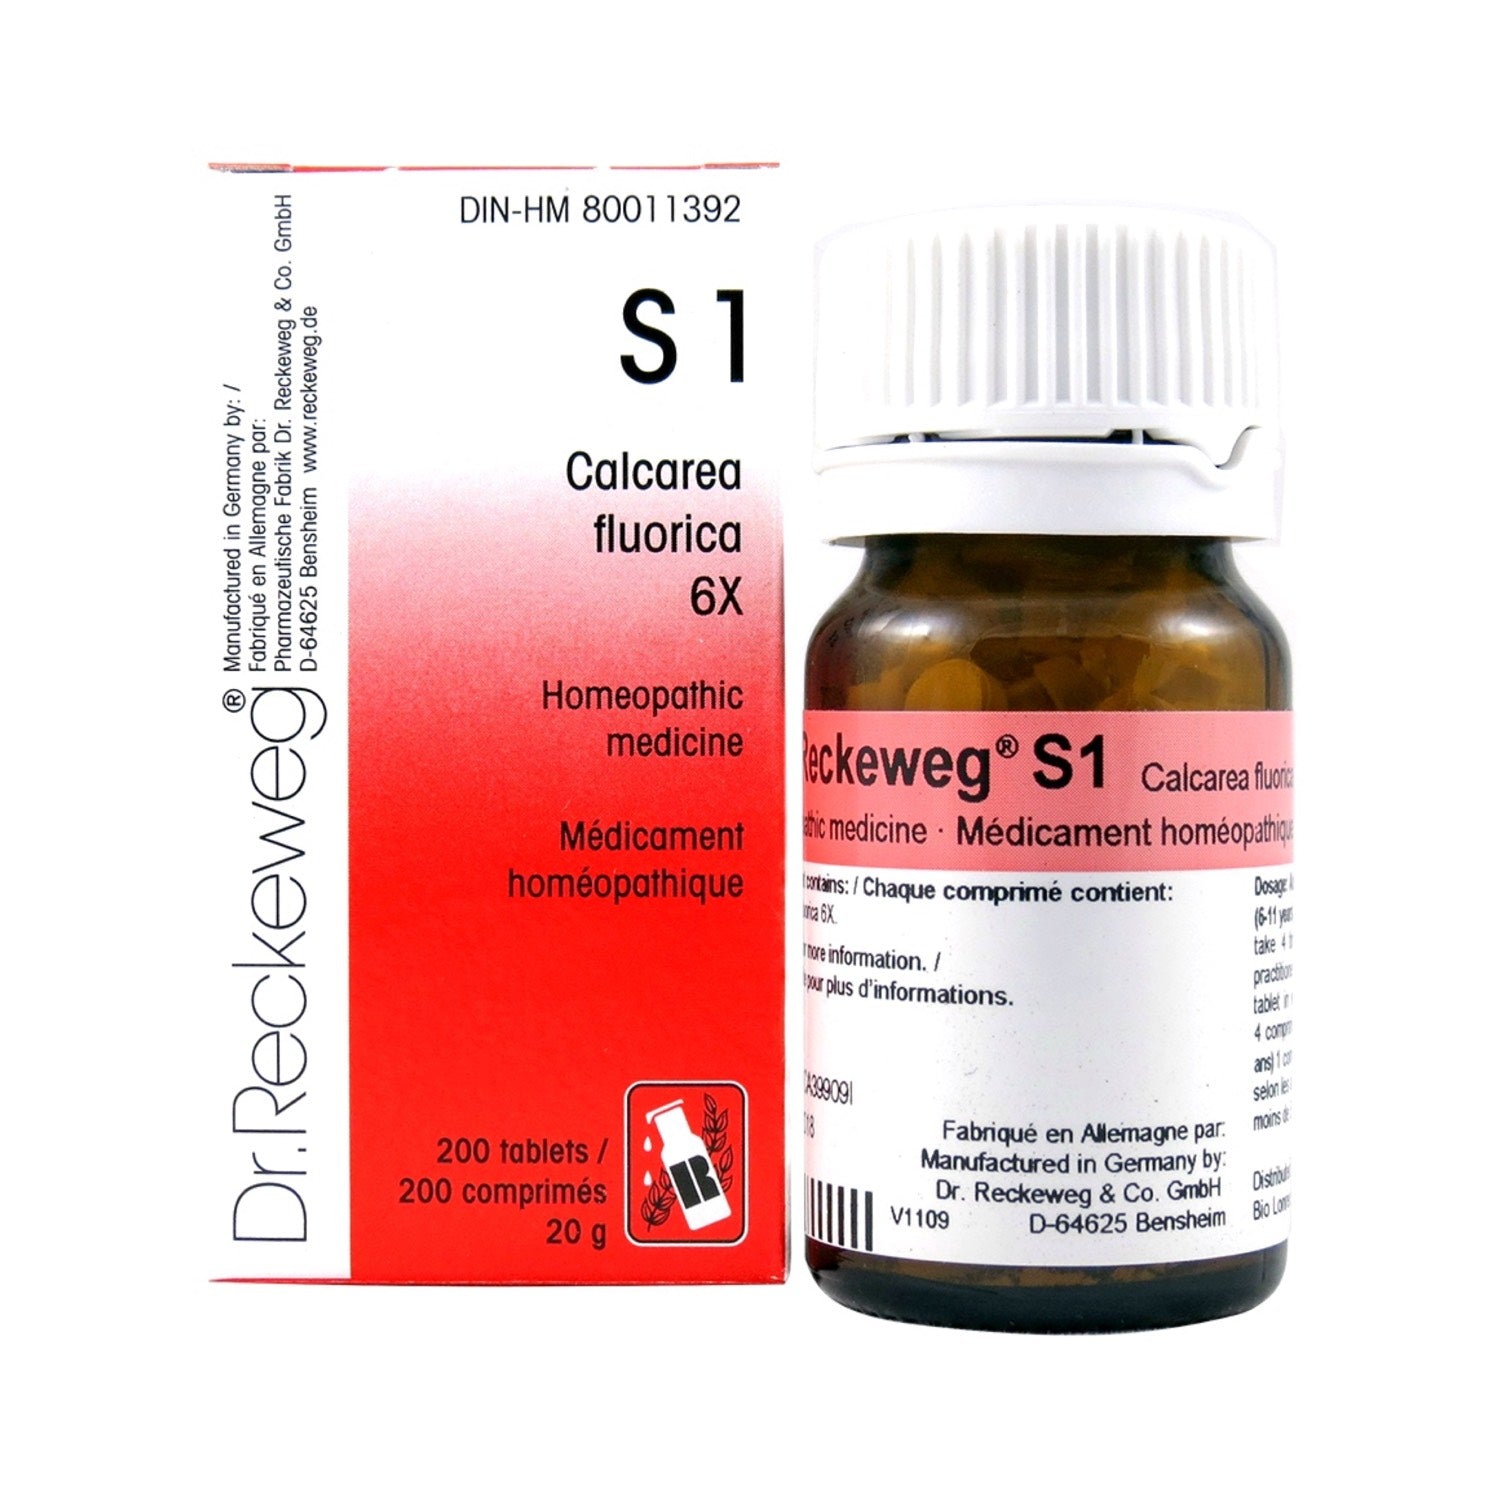 S1 Calcarea fluorica Homeopathic medicine Schuessler salt  6X 200 tablets (20 g) - iwellnessbox